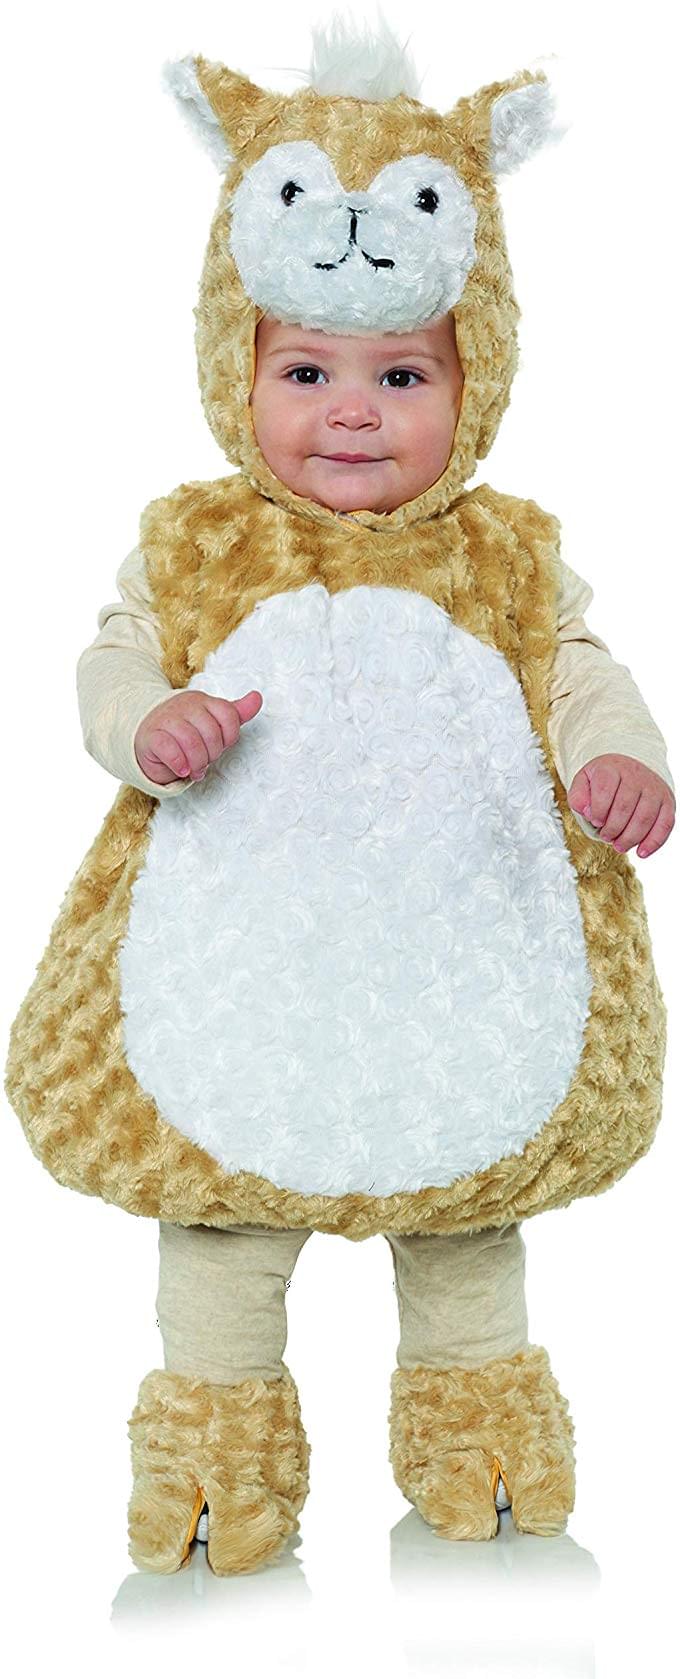 Llama Belly Babies Toddler Costume